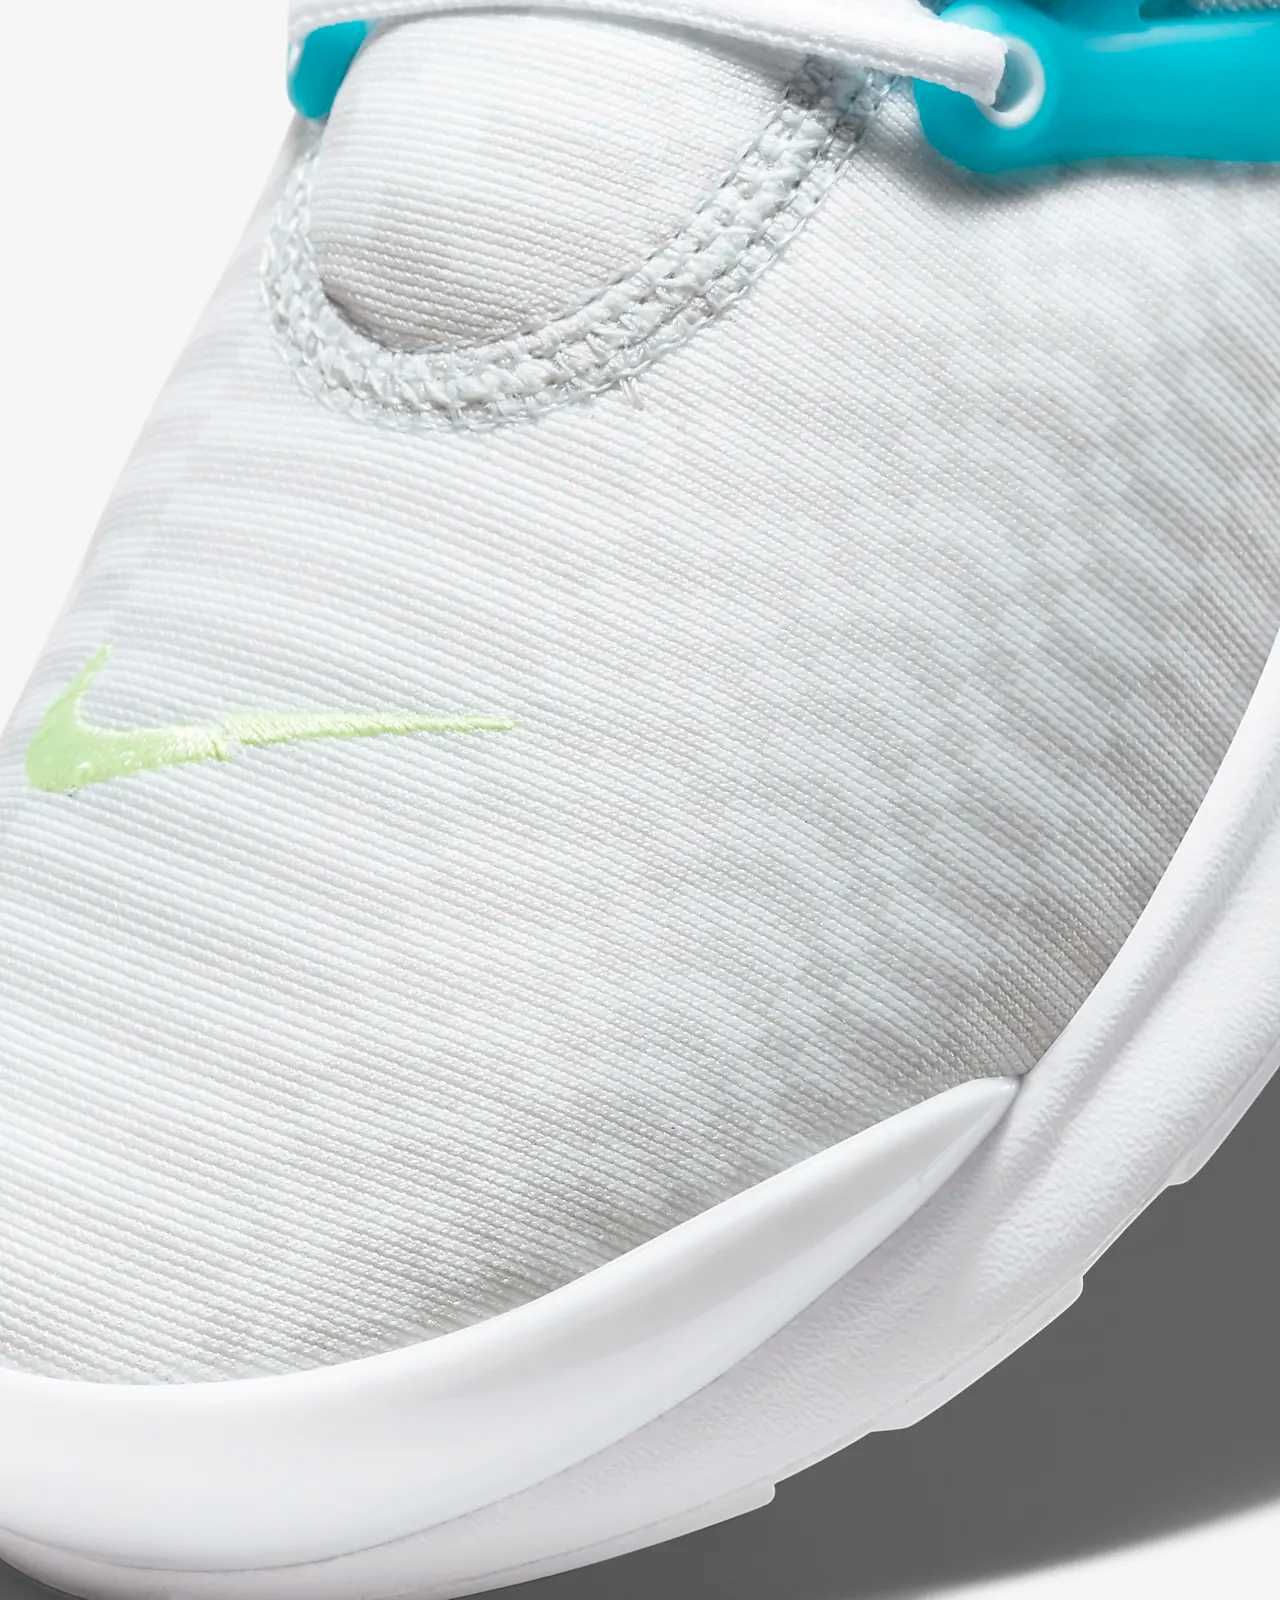 Adidasi ORIGINALI Nike Presto 'White Aqua'  Germania nr 36;37.5